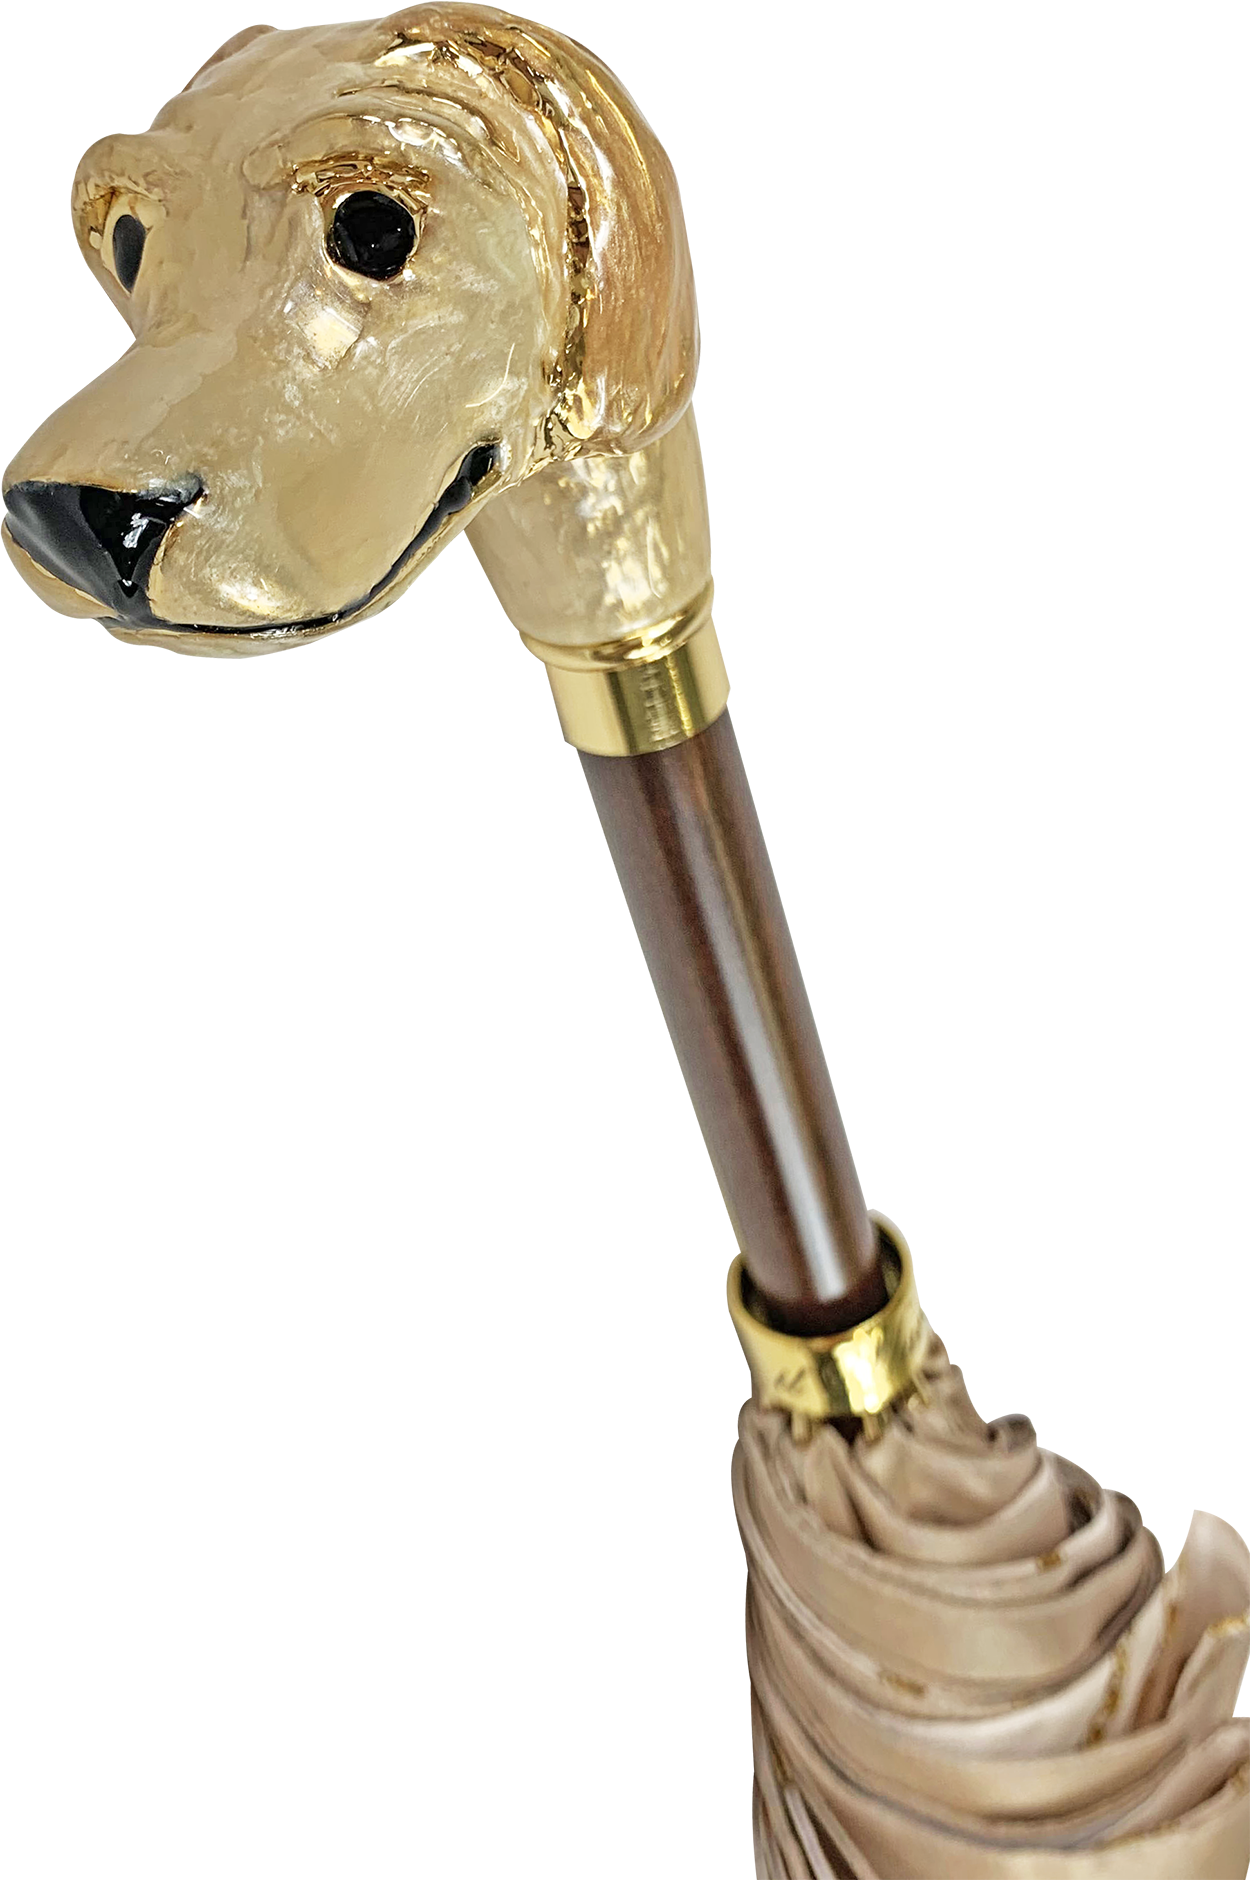 Handmade umbrella with hand-enamelled Dog and Elegant design